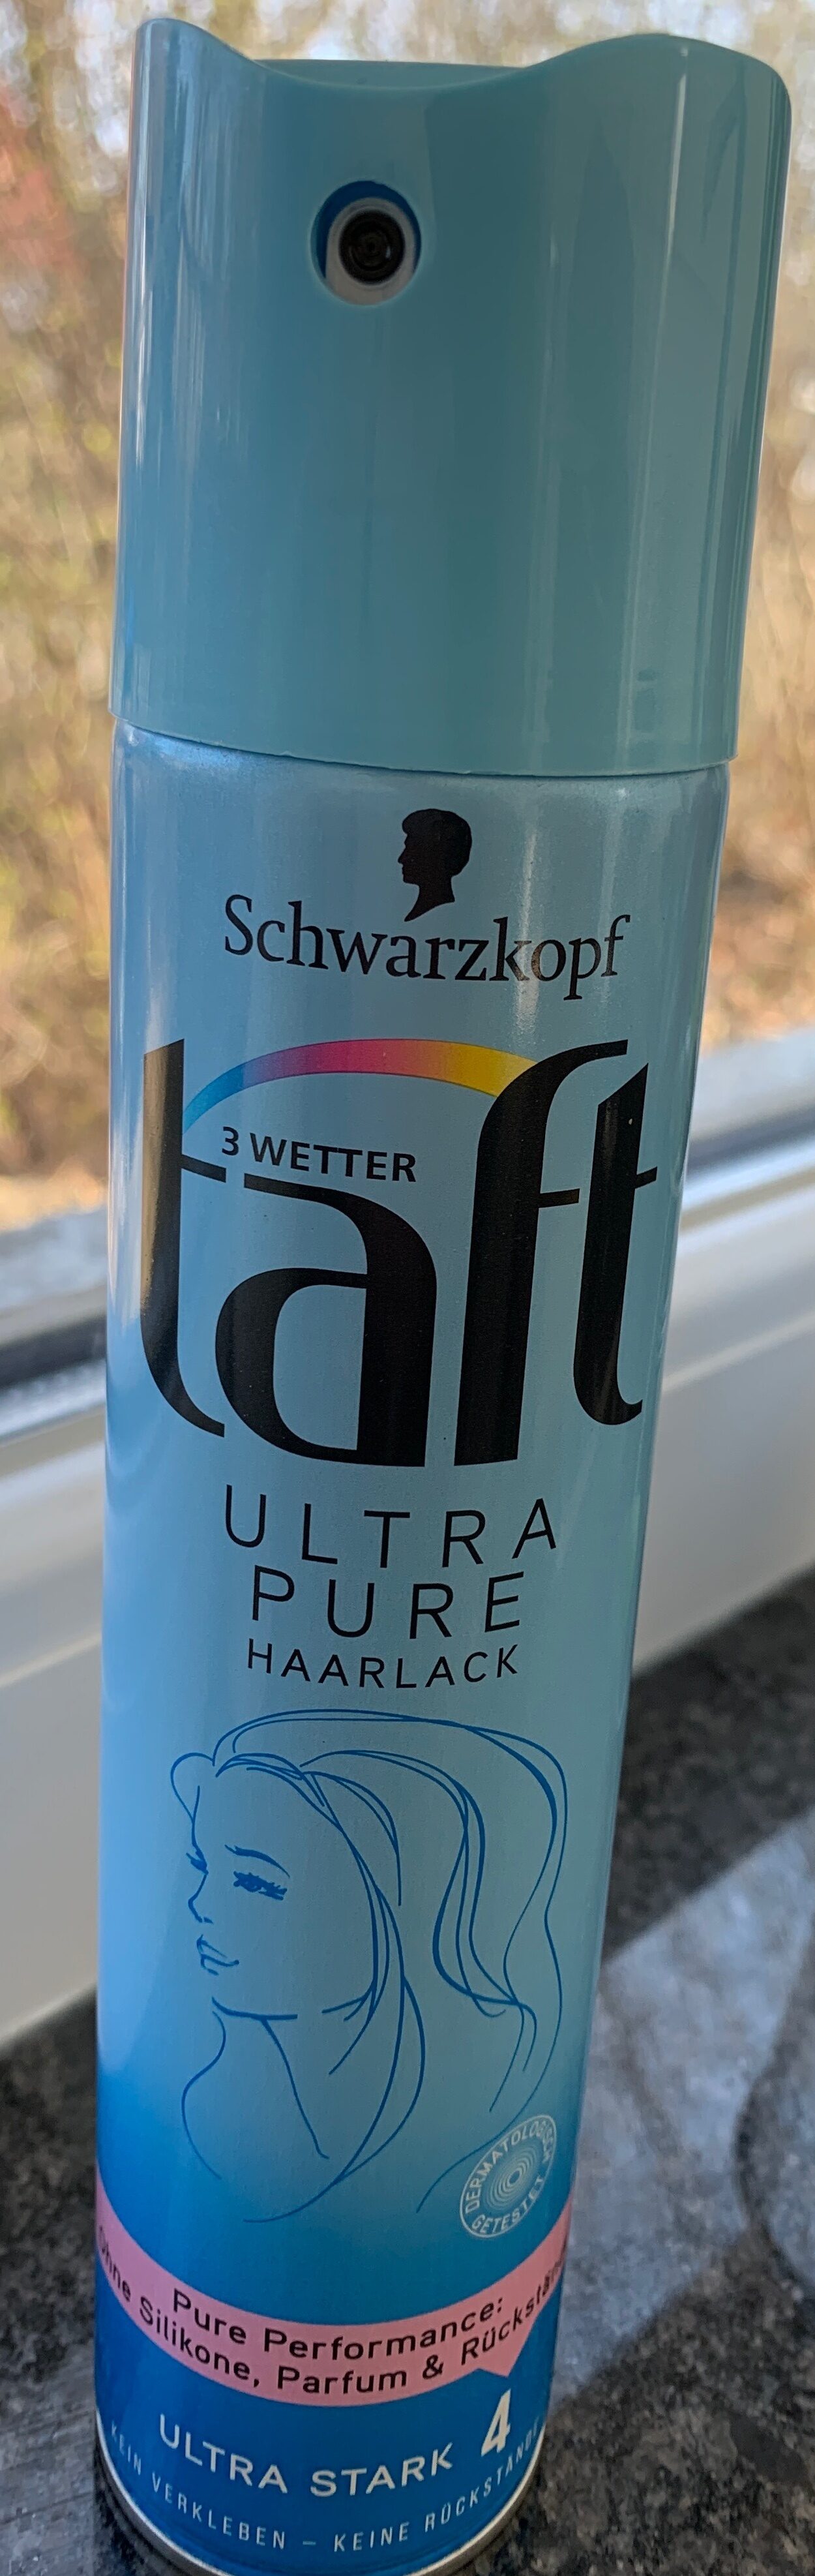 Haarlack Ultra Pure - Product - de